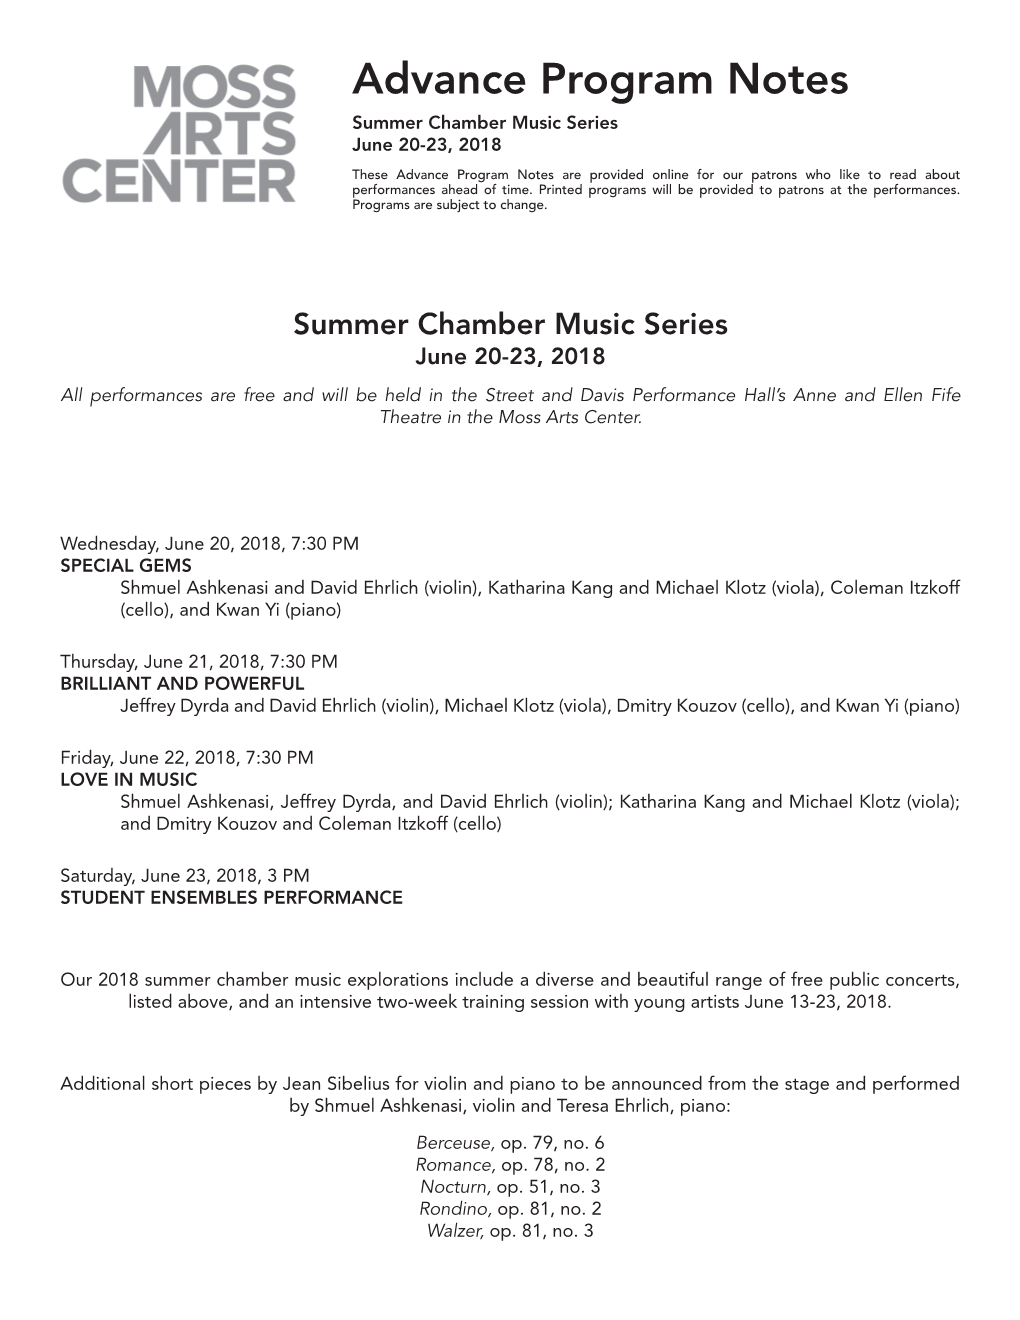 Advance Program Notes Summer Chamber Music Series June 20-23, 2018